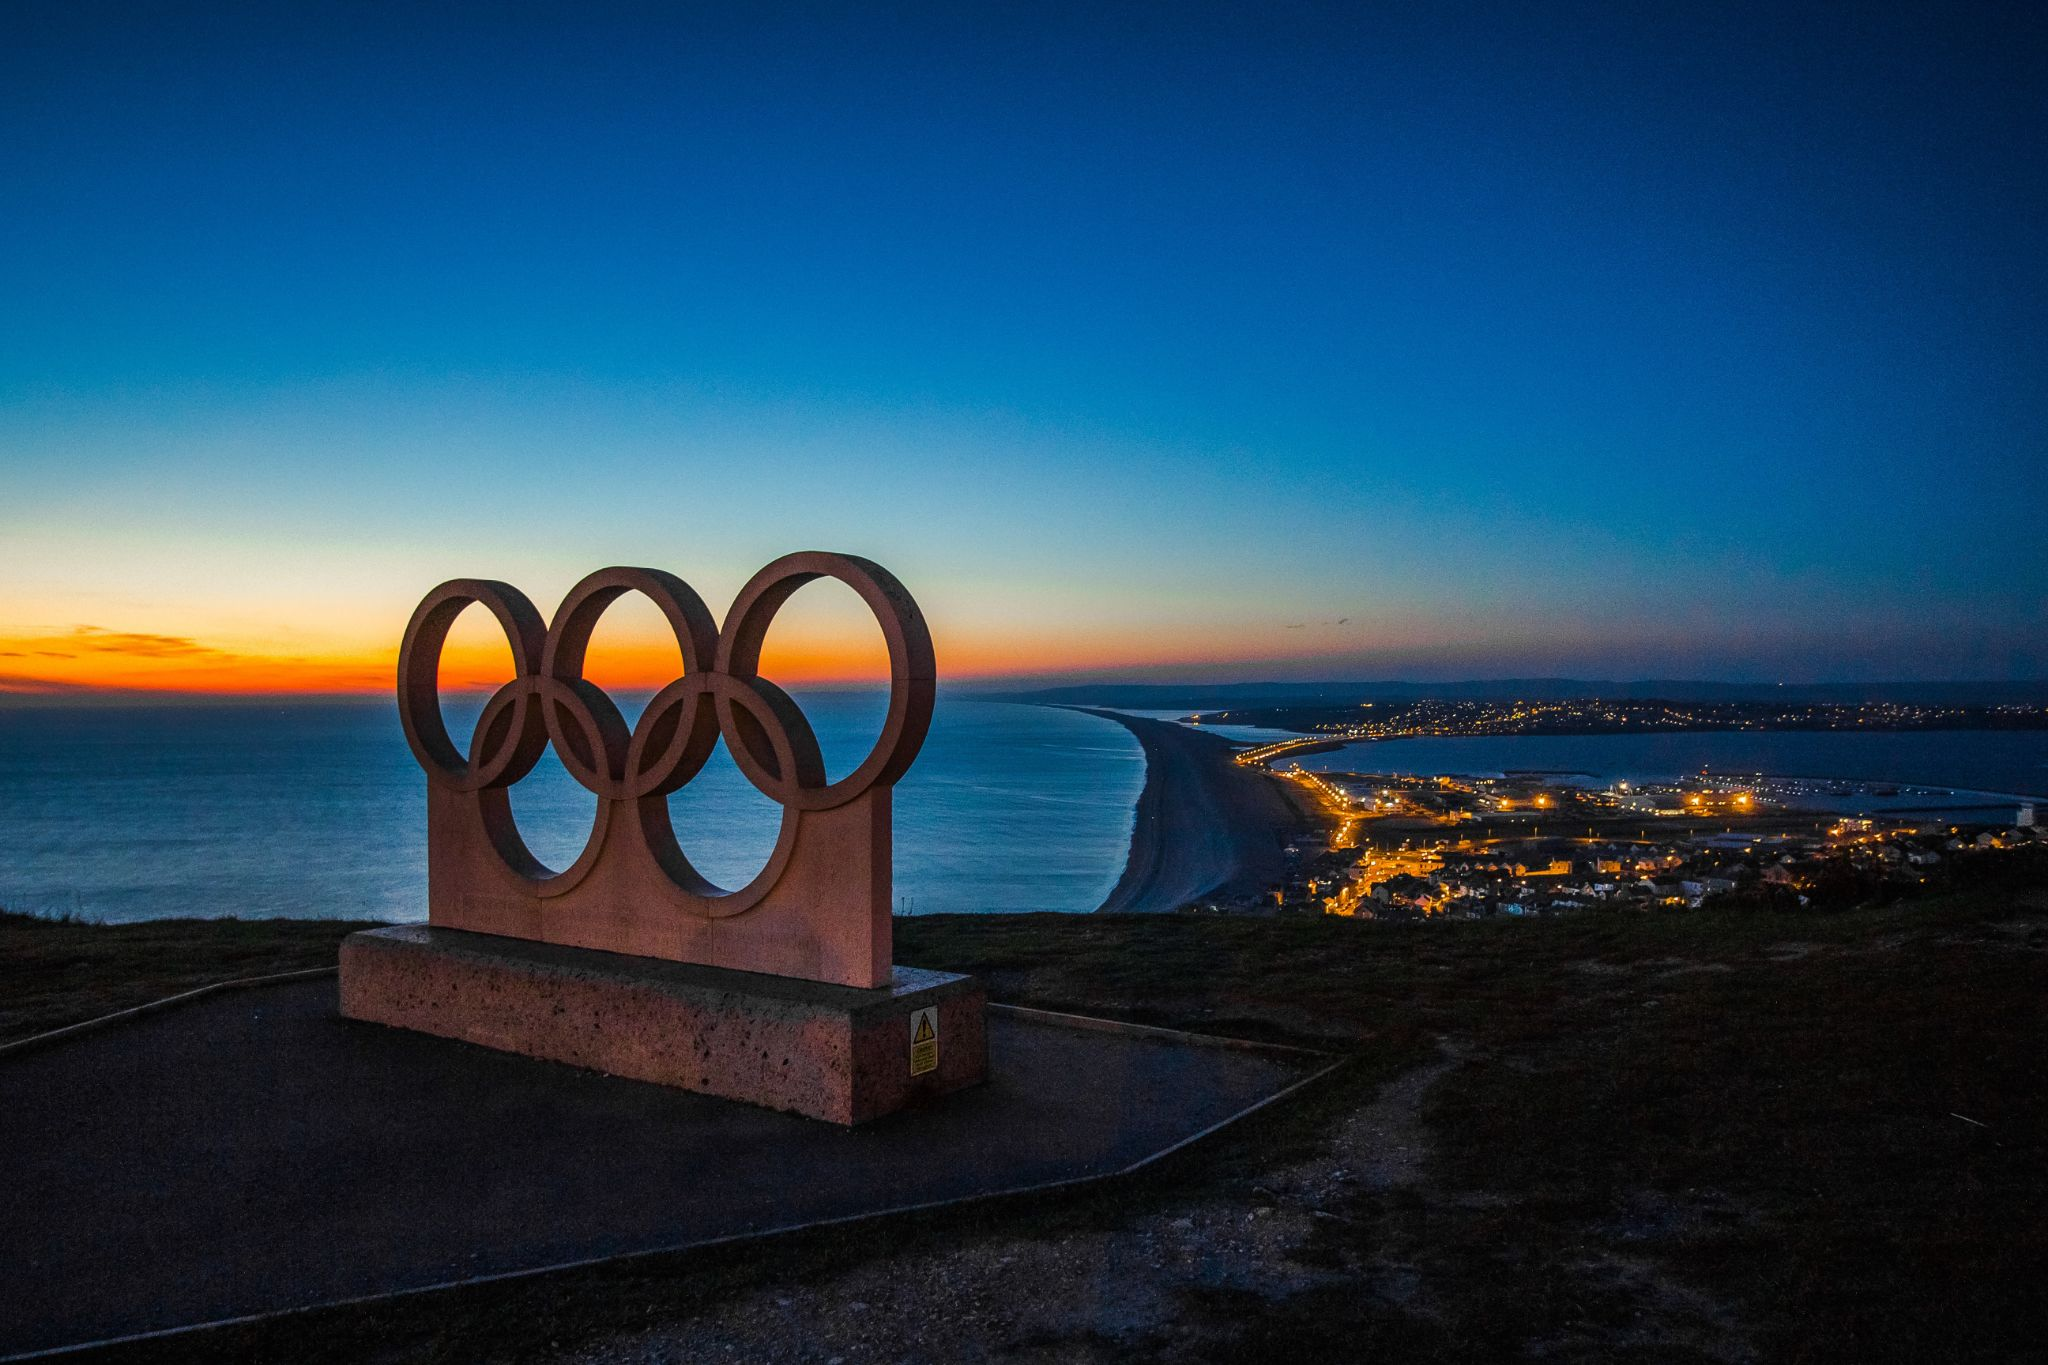 Olympics logo at night